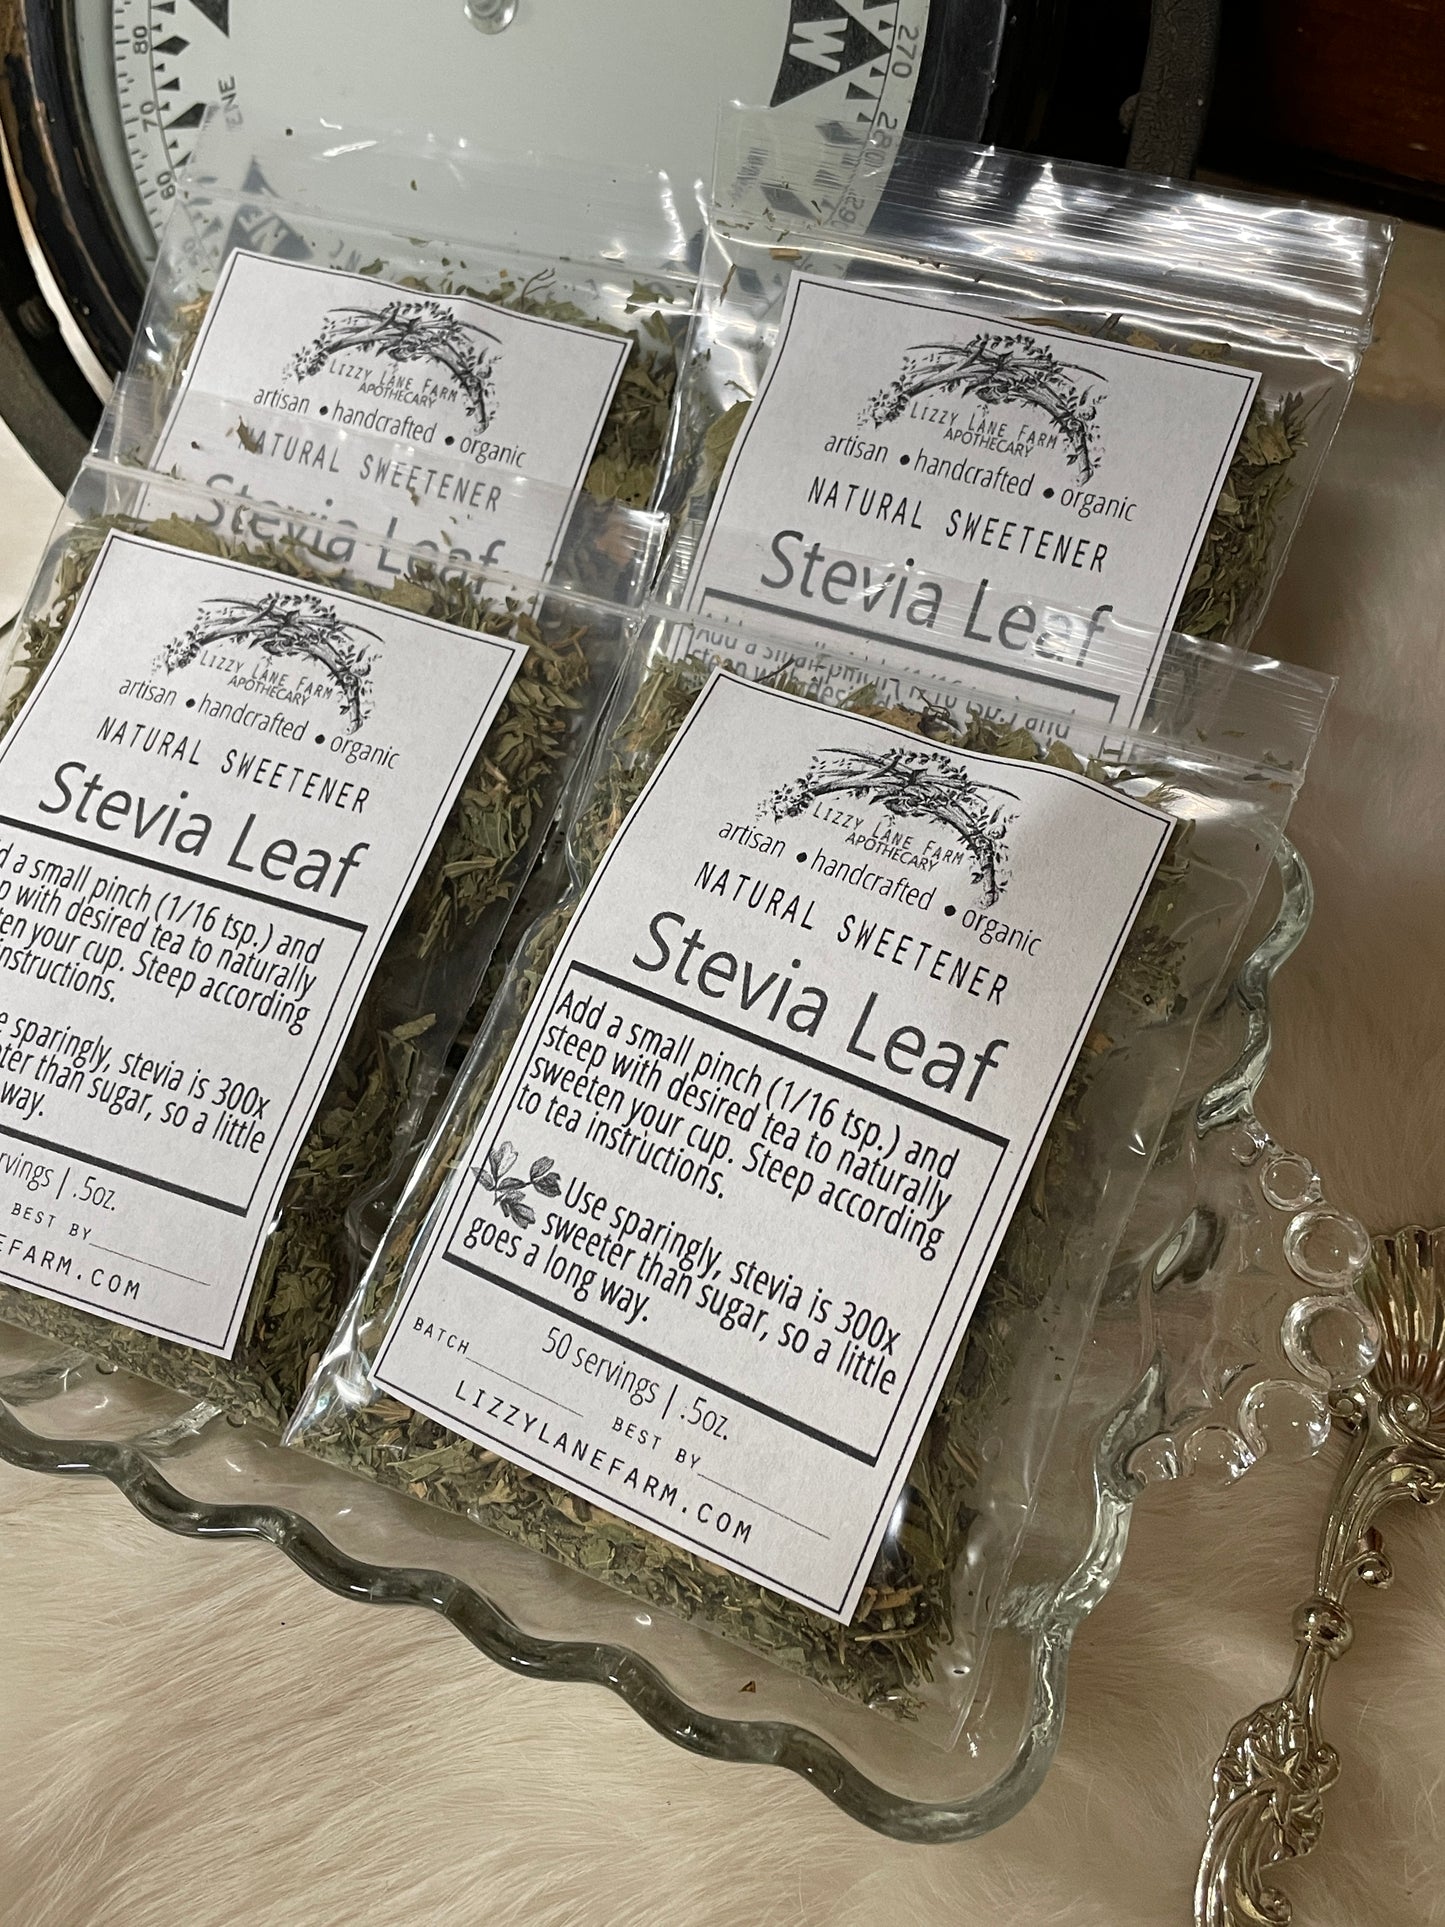 Organic Sweet Stevia Leaf | Dried Herb | Premium Quality Herbals | Natural Sweetener | Calorie Free | Sugar Free